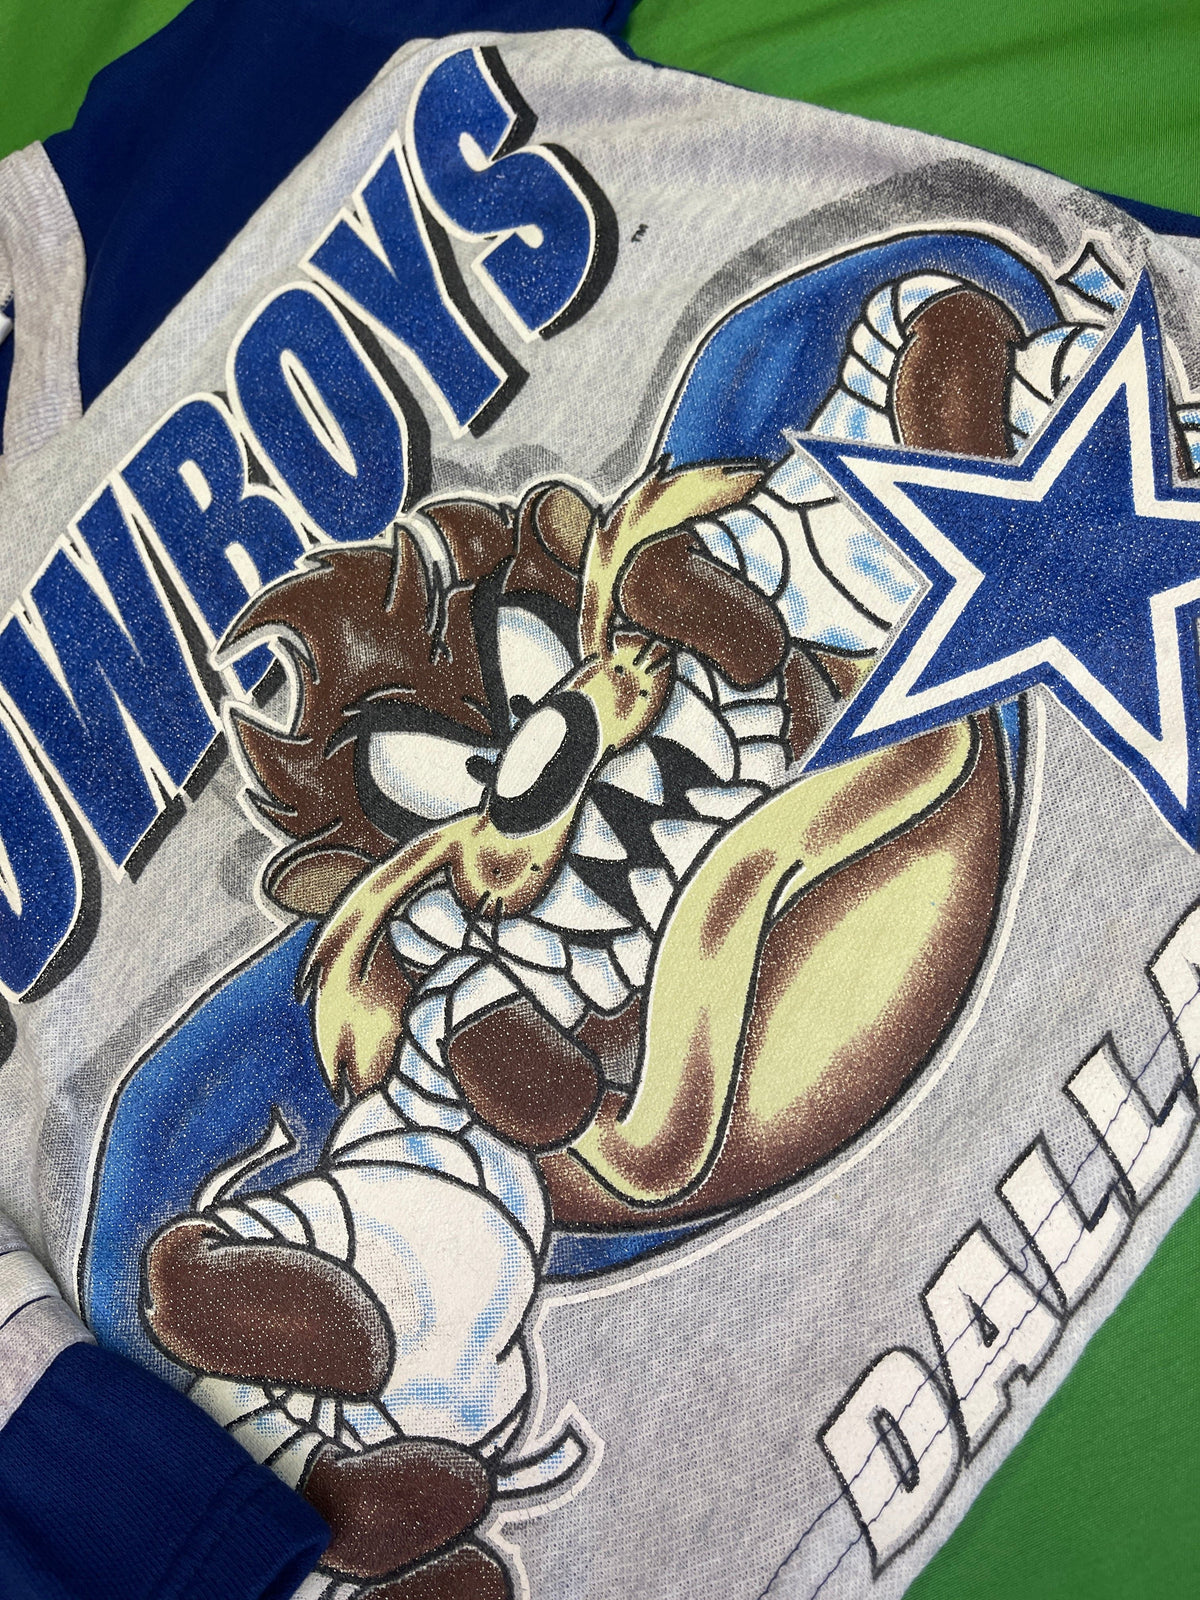 NFL Dallas Cowboys Vintage Tasmanian Devil Taz T-Shirt Youth X-Small 4-5